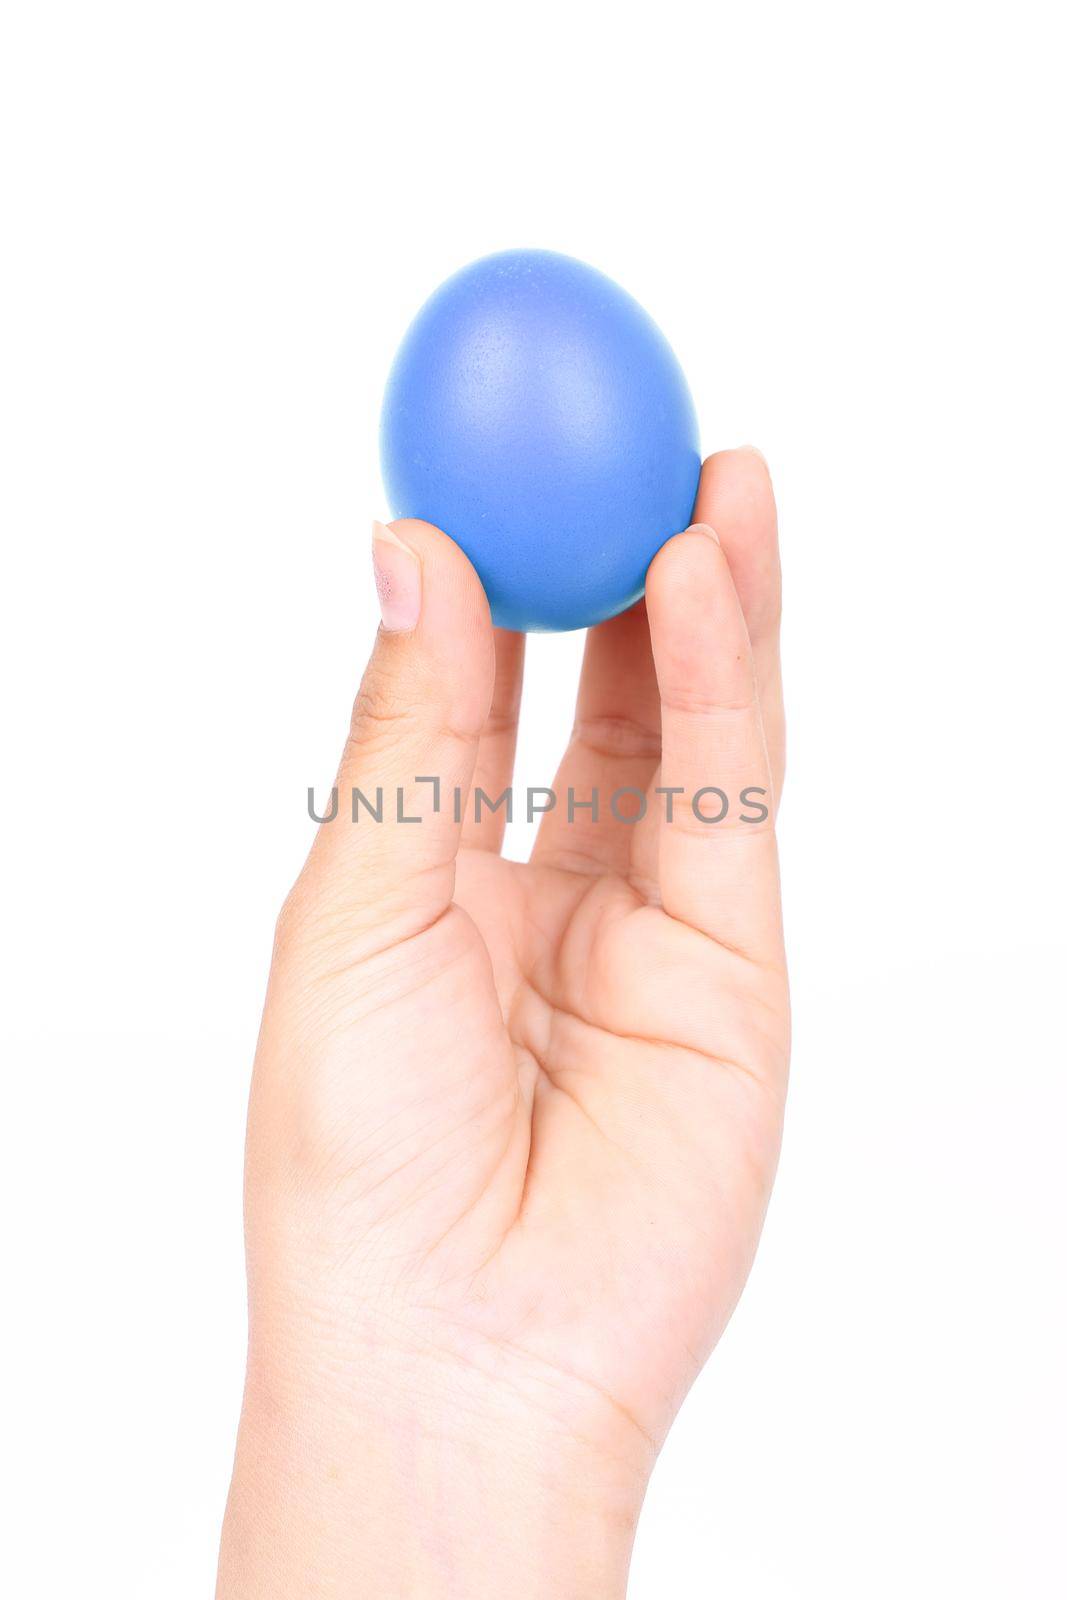 blue easter egg in hand on white background